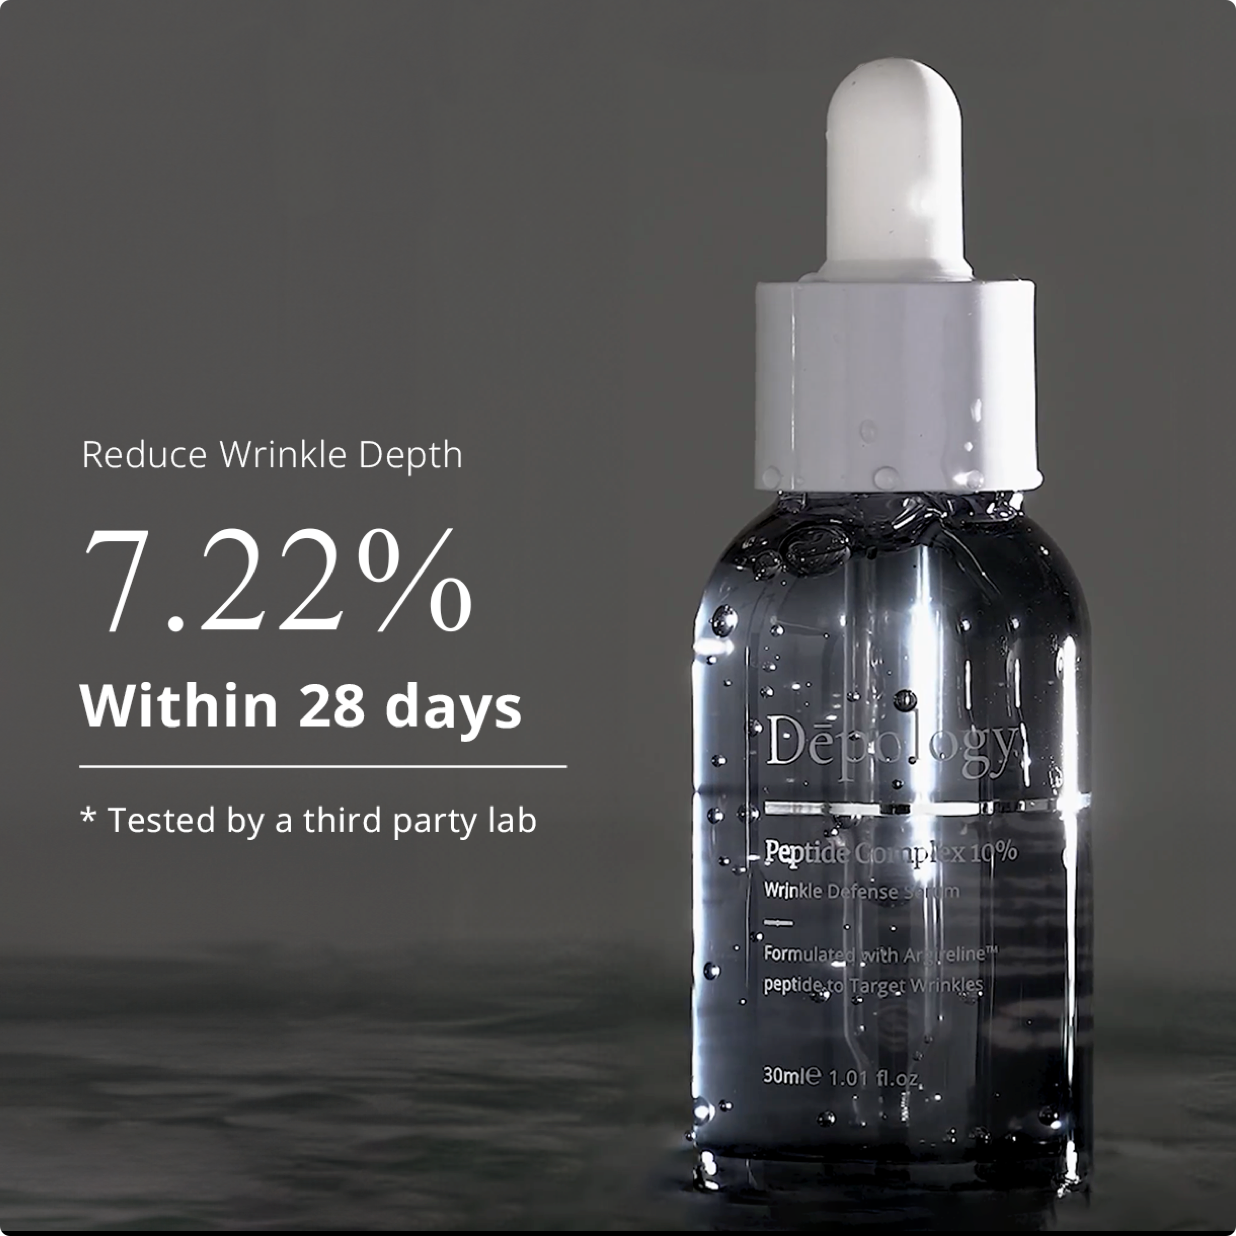 Depology Argireline Collagen Peptide serum wrinkle reduction from 7.22% in 28 days